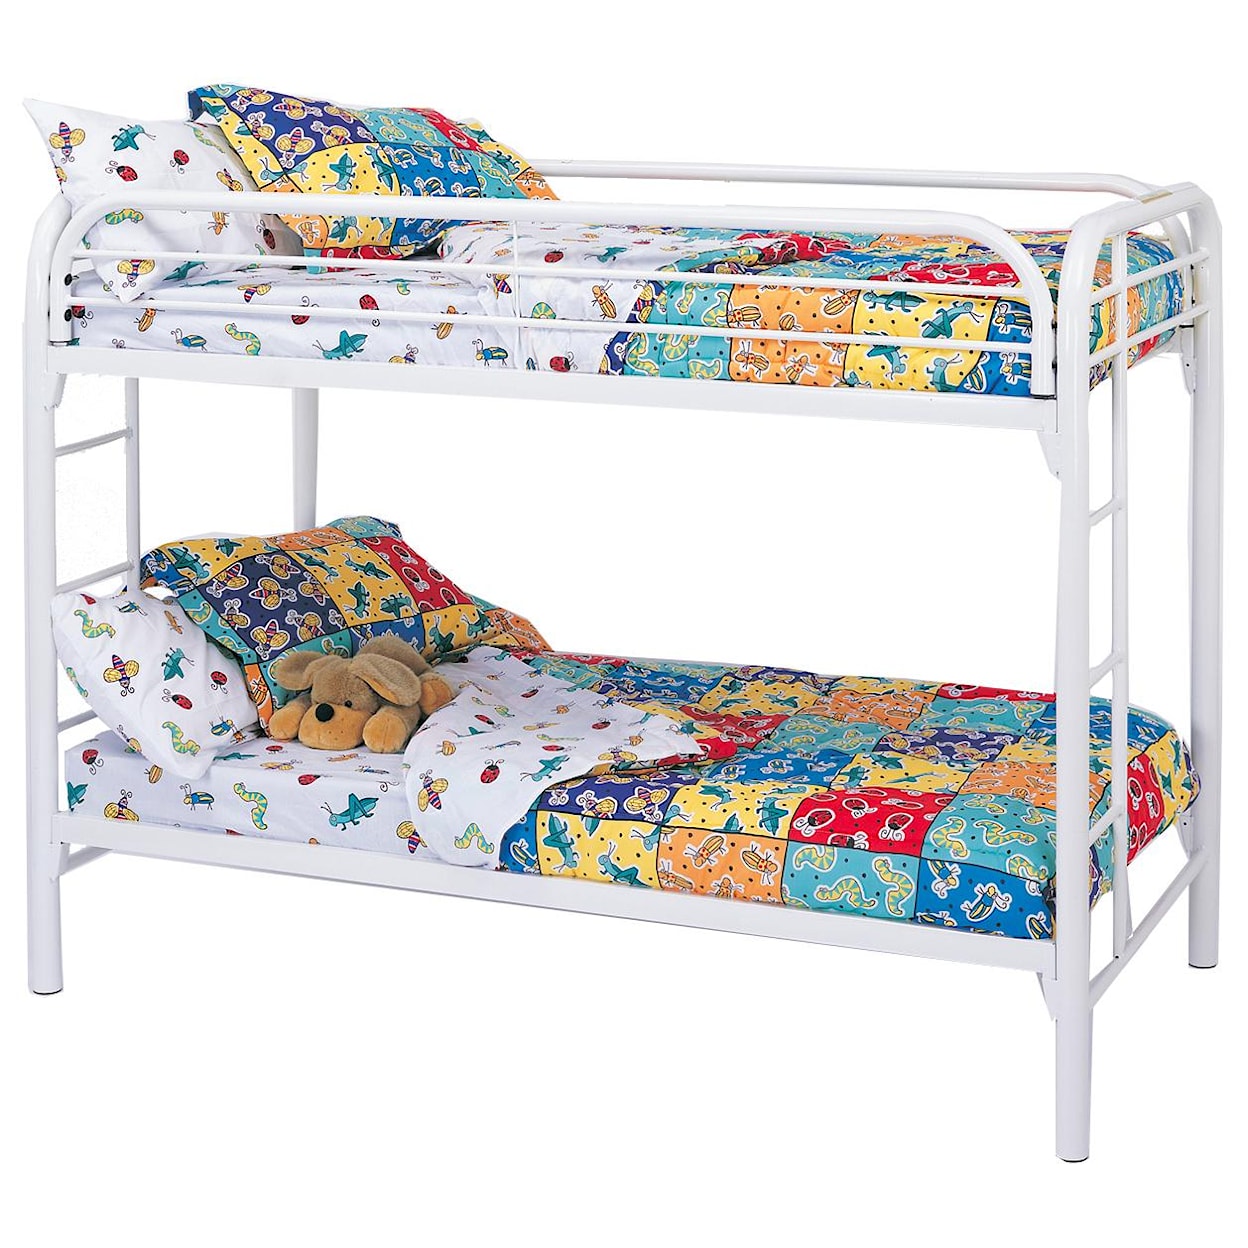 Michael Alan CSR Select Metal Beds Twin Bunk Bed